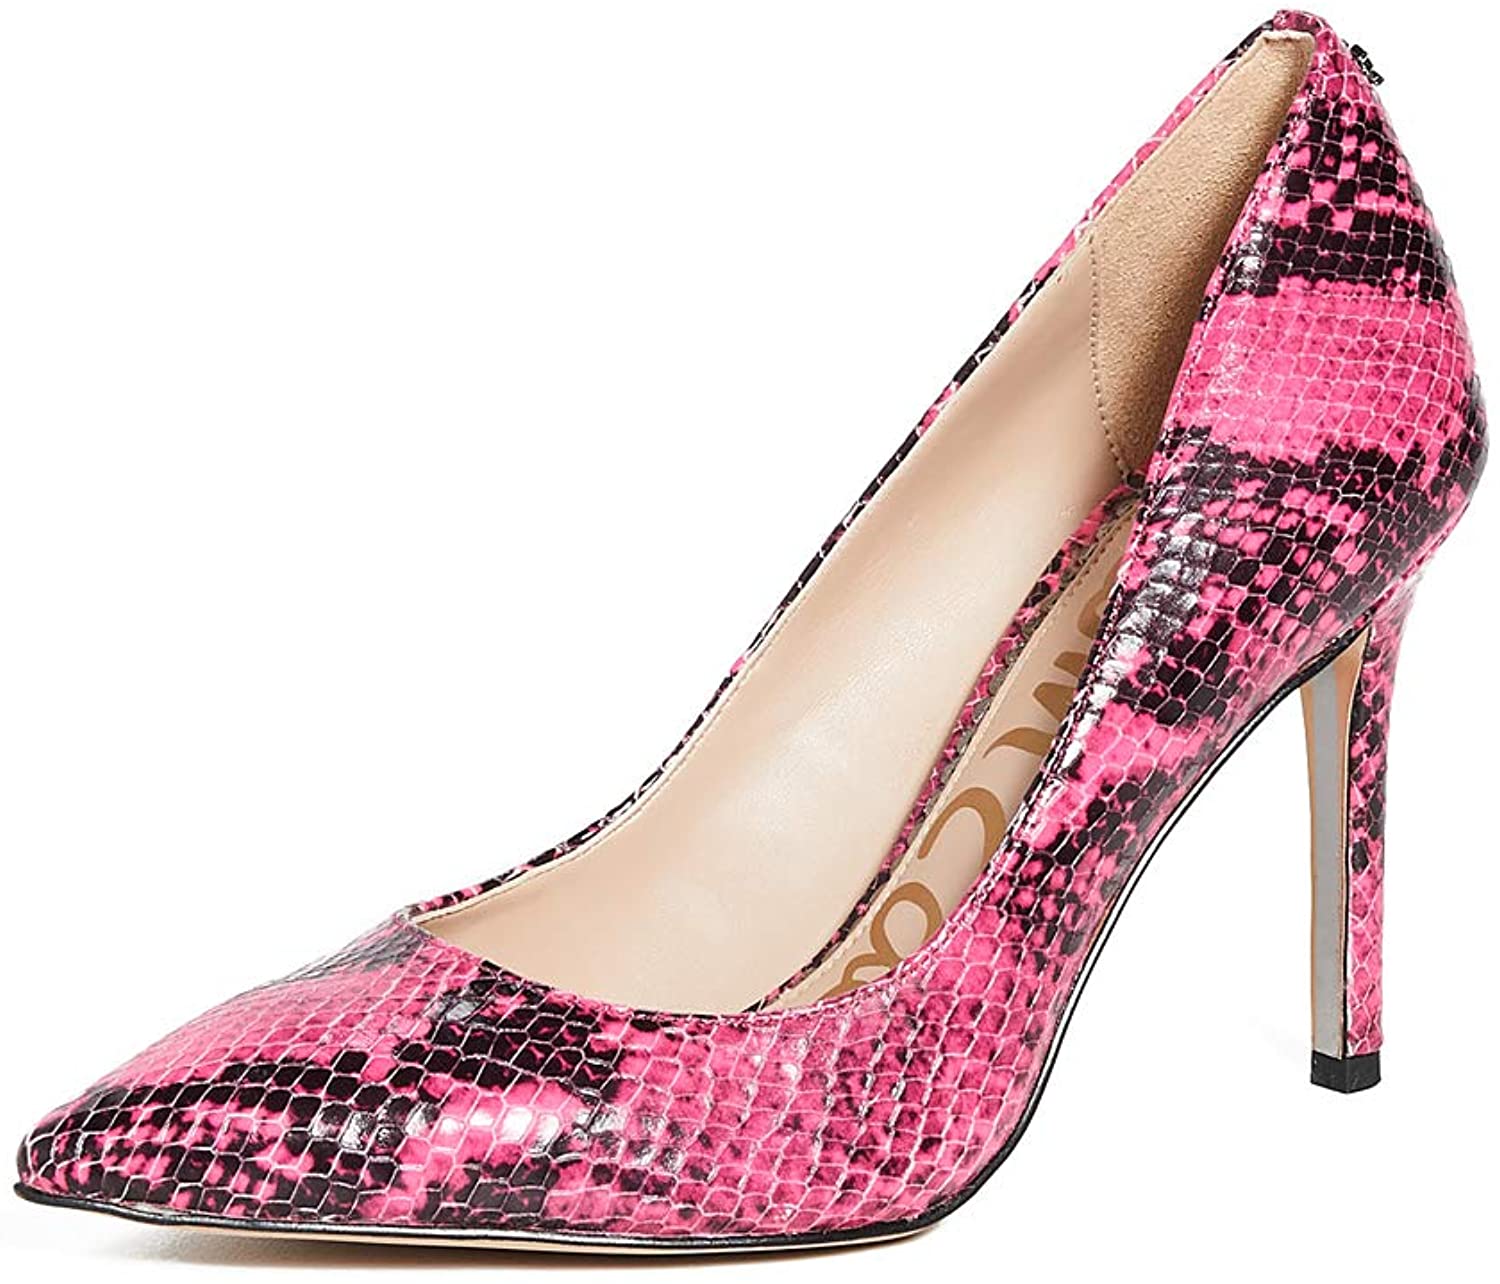 Sam Edelman Hazel Hot Pink Snake Print Pointed Stiletto Dress Shoes Pumps (9) - image 1 of 3